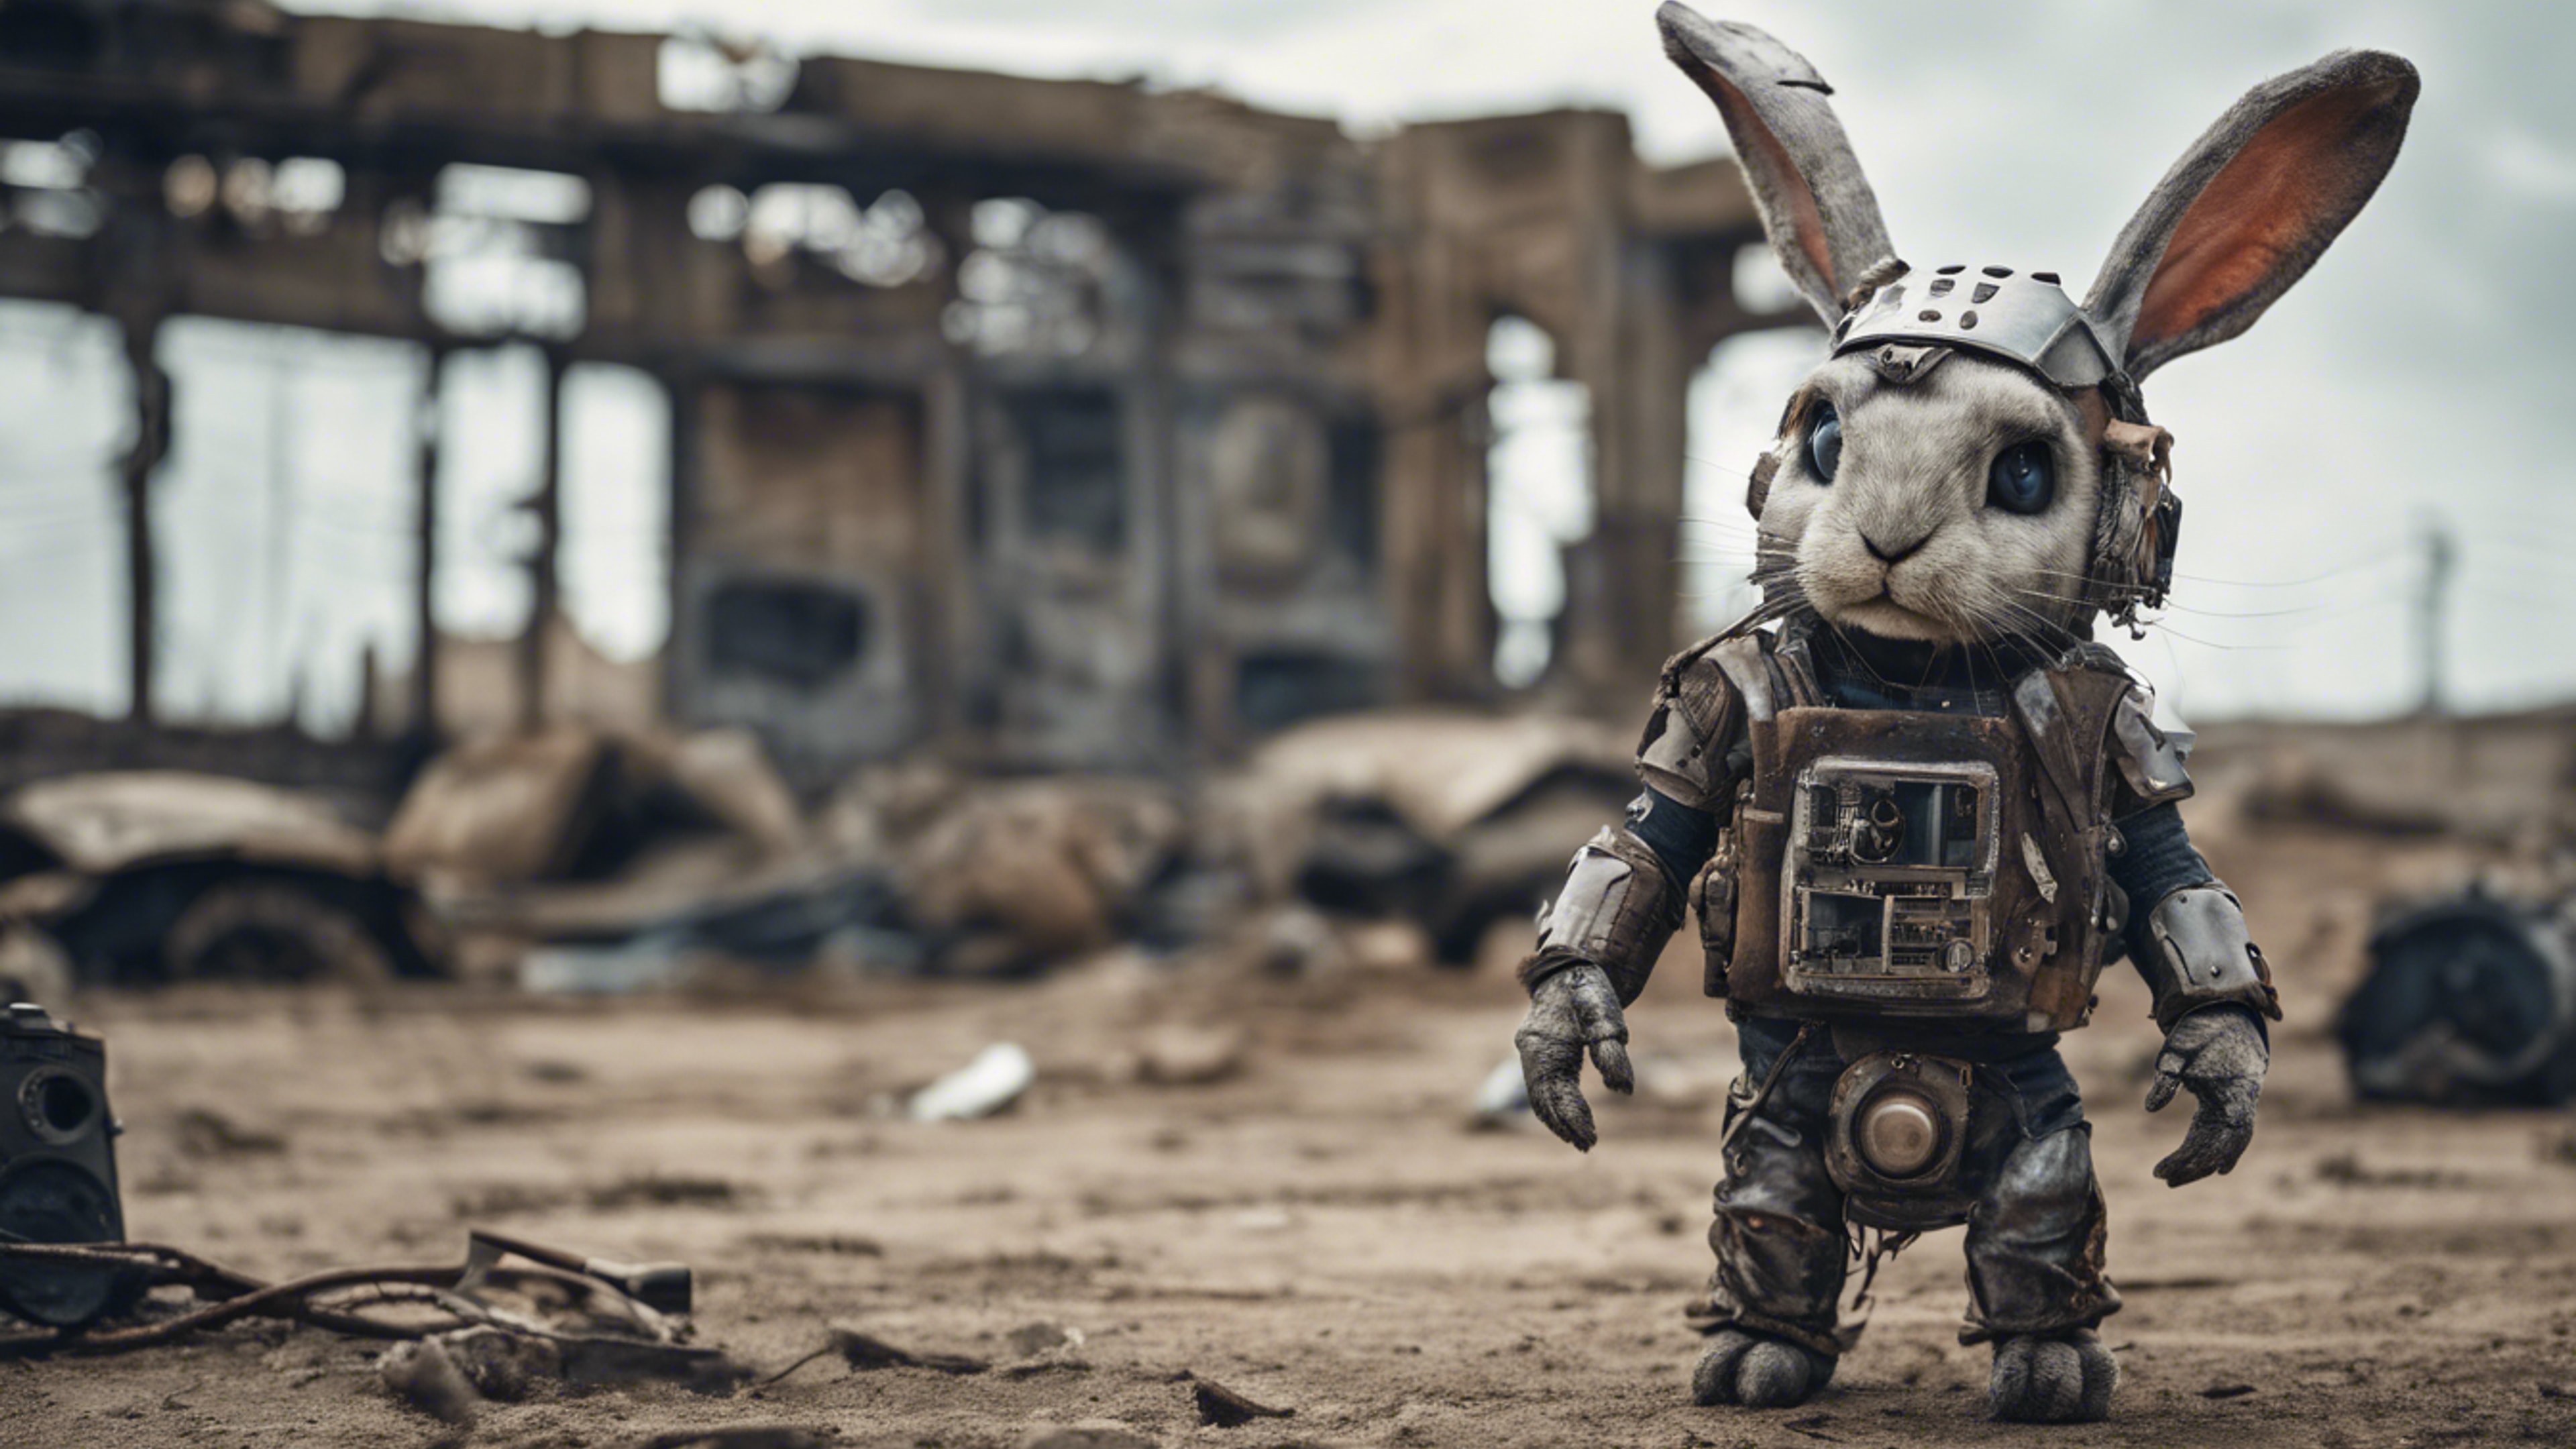 A post-apocalyptic scenario featuring a cyborg rabbit in a desolate wasteland.壁紙[92bb3fc1507c4f1094fc]